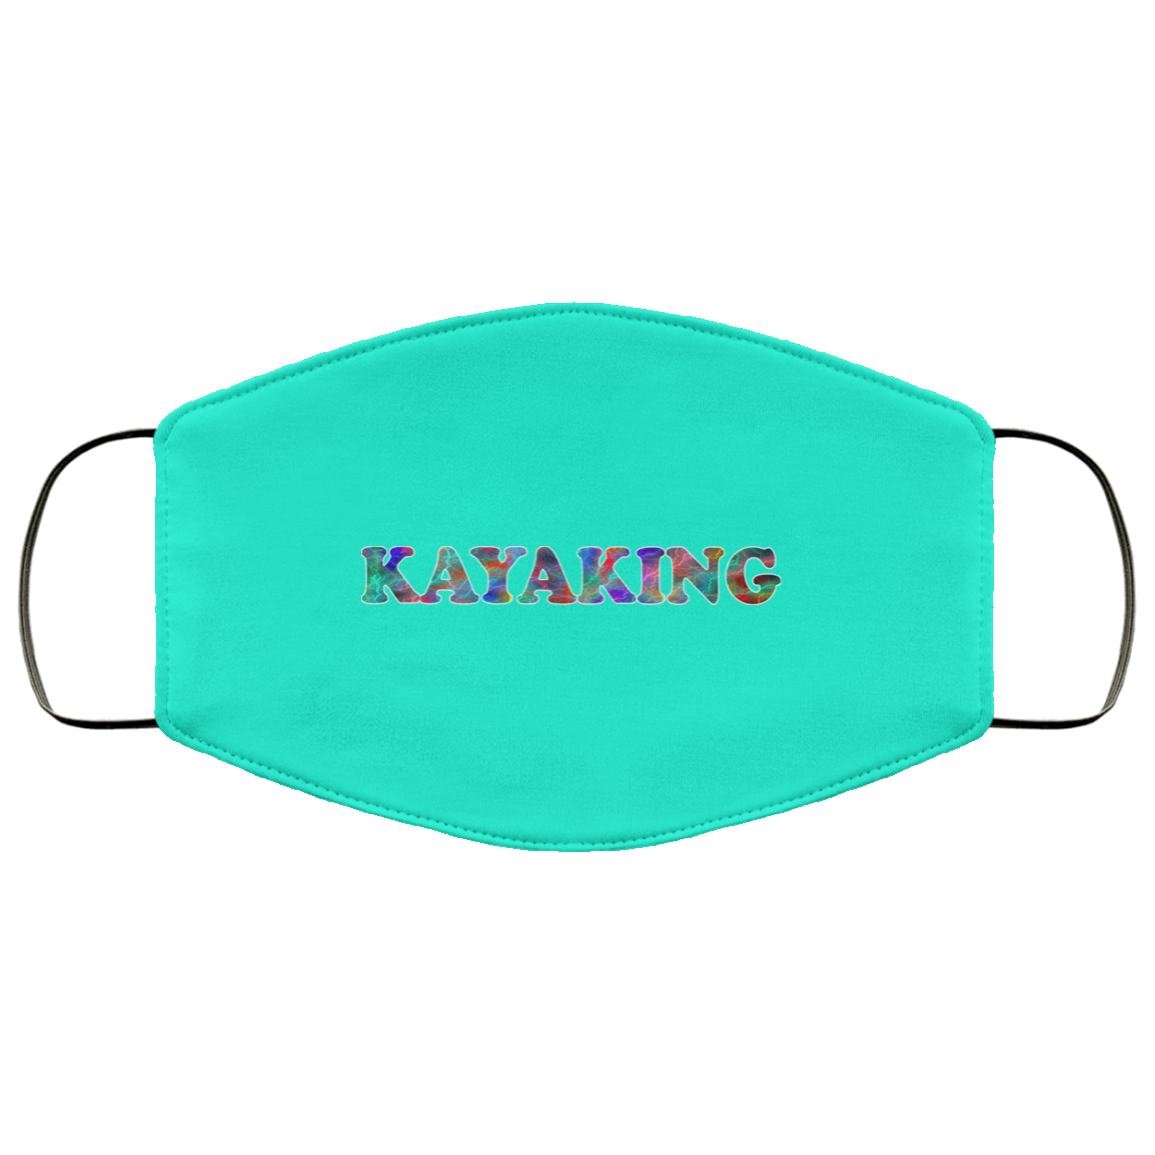 Kayaking 2 Layer Protective Mask